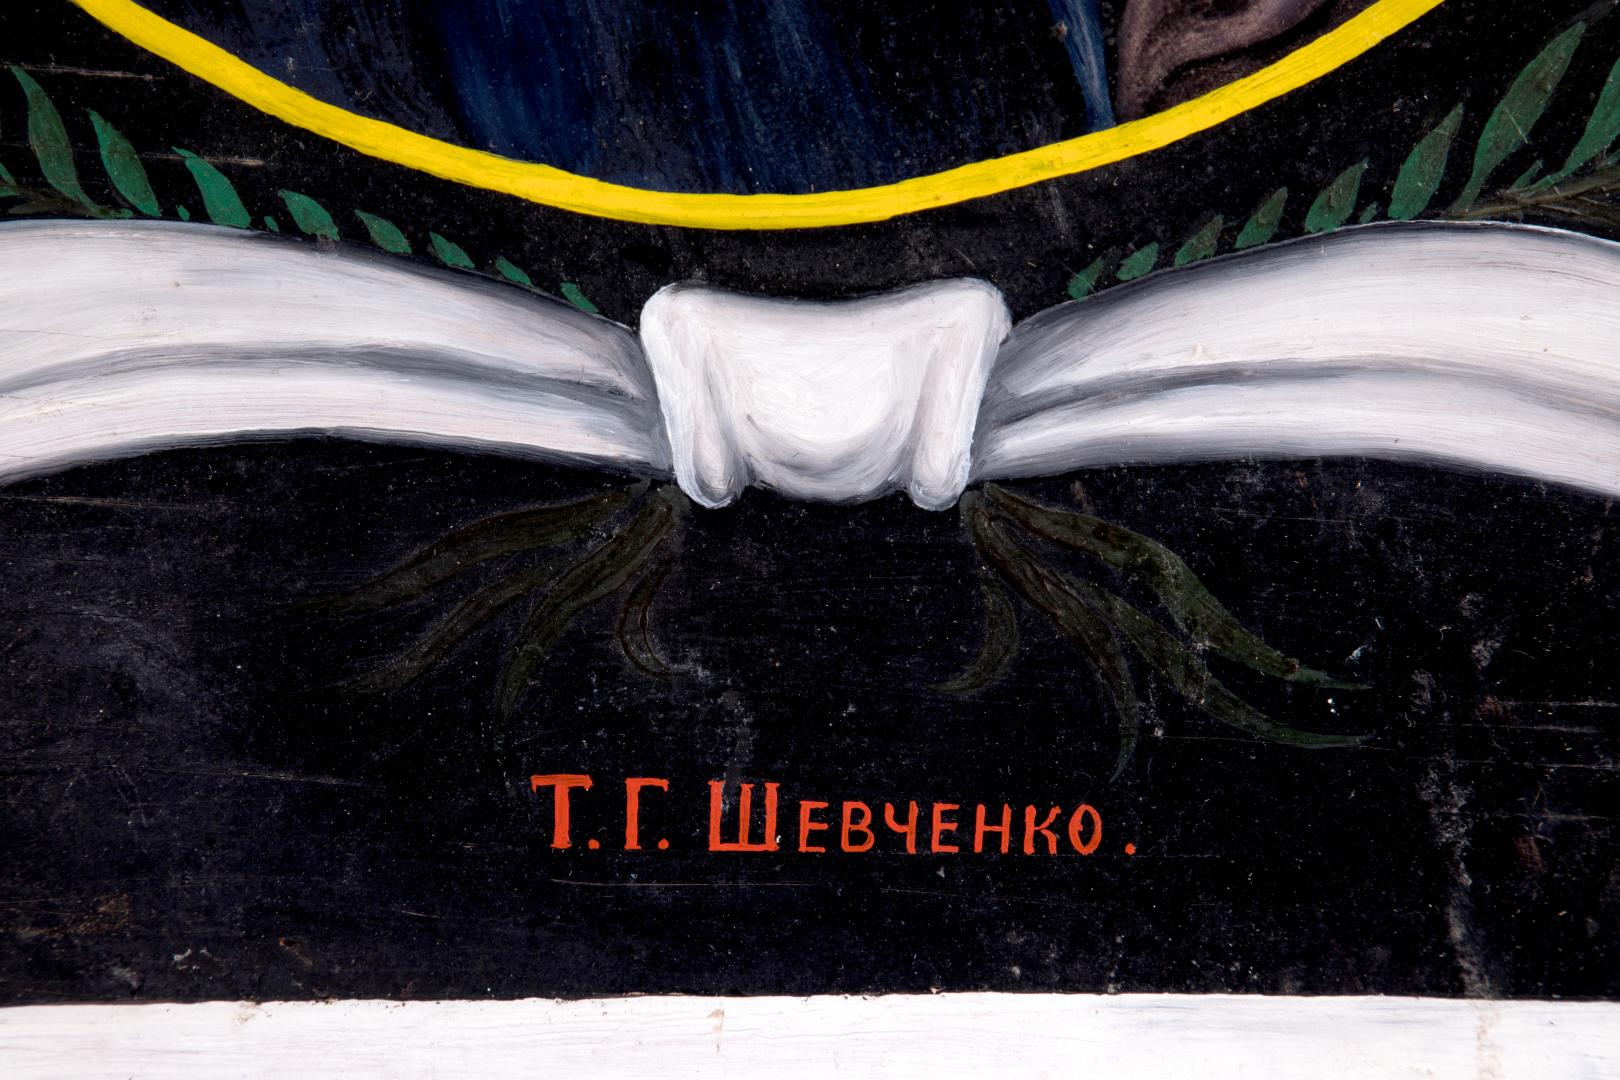 Portrait of Taras Shevchenko